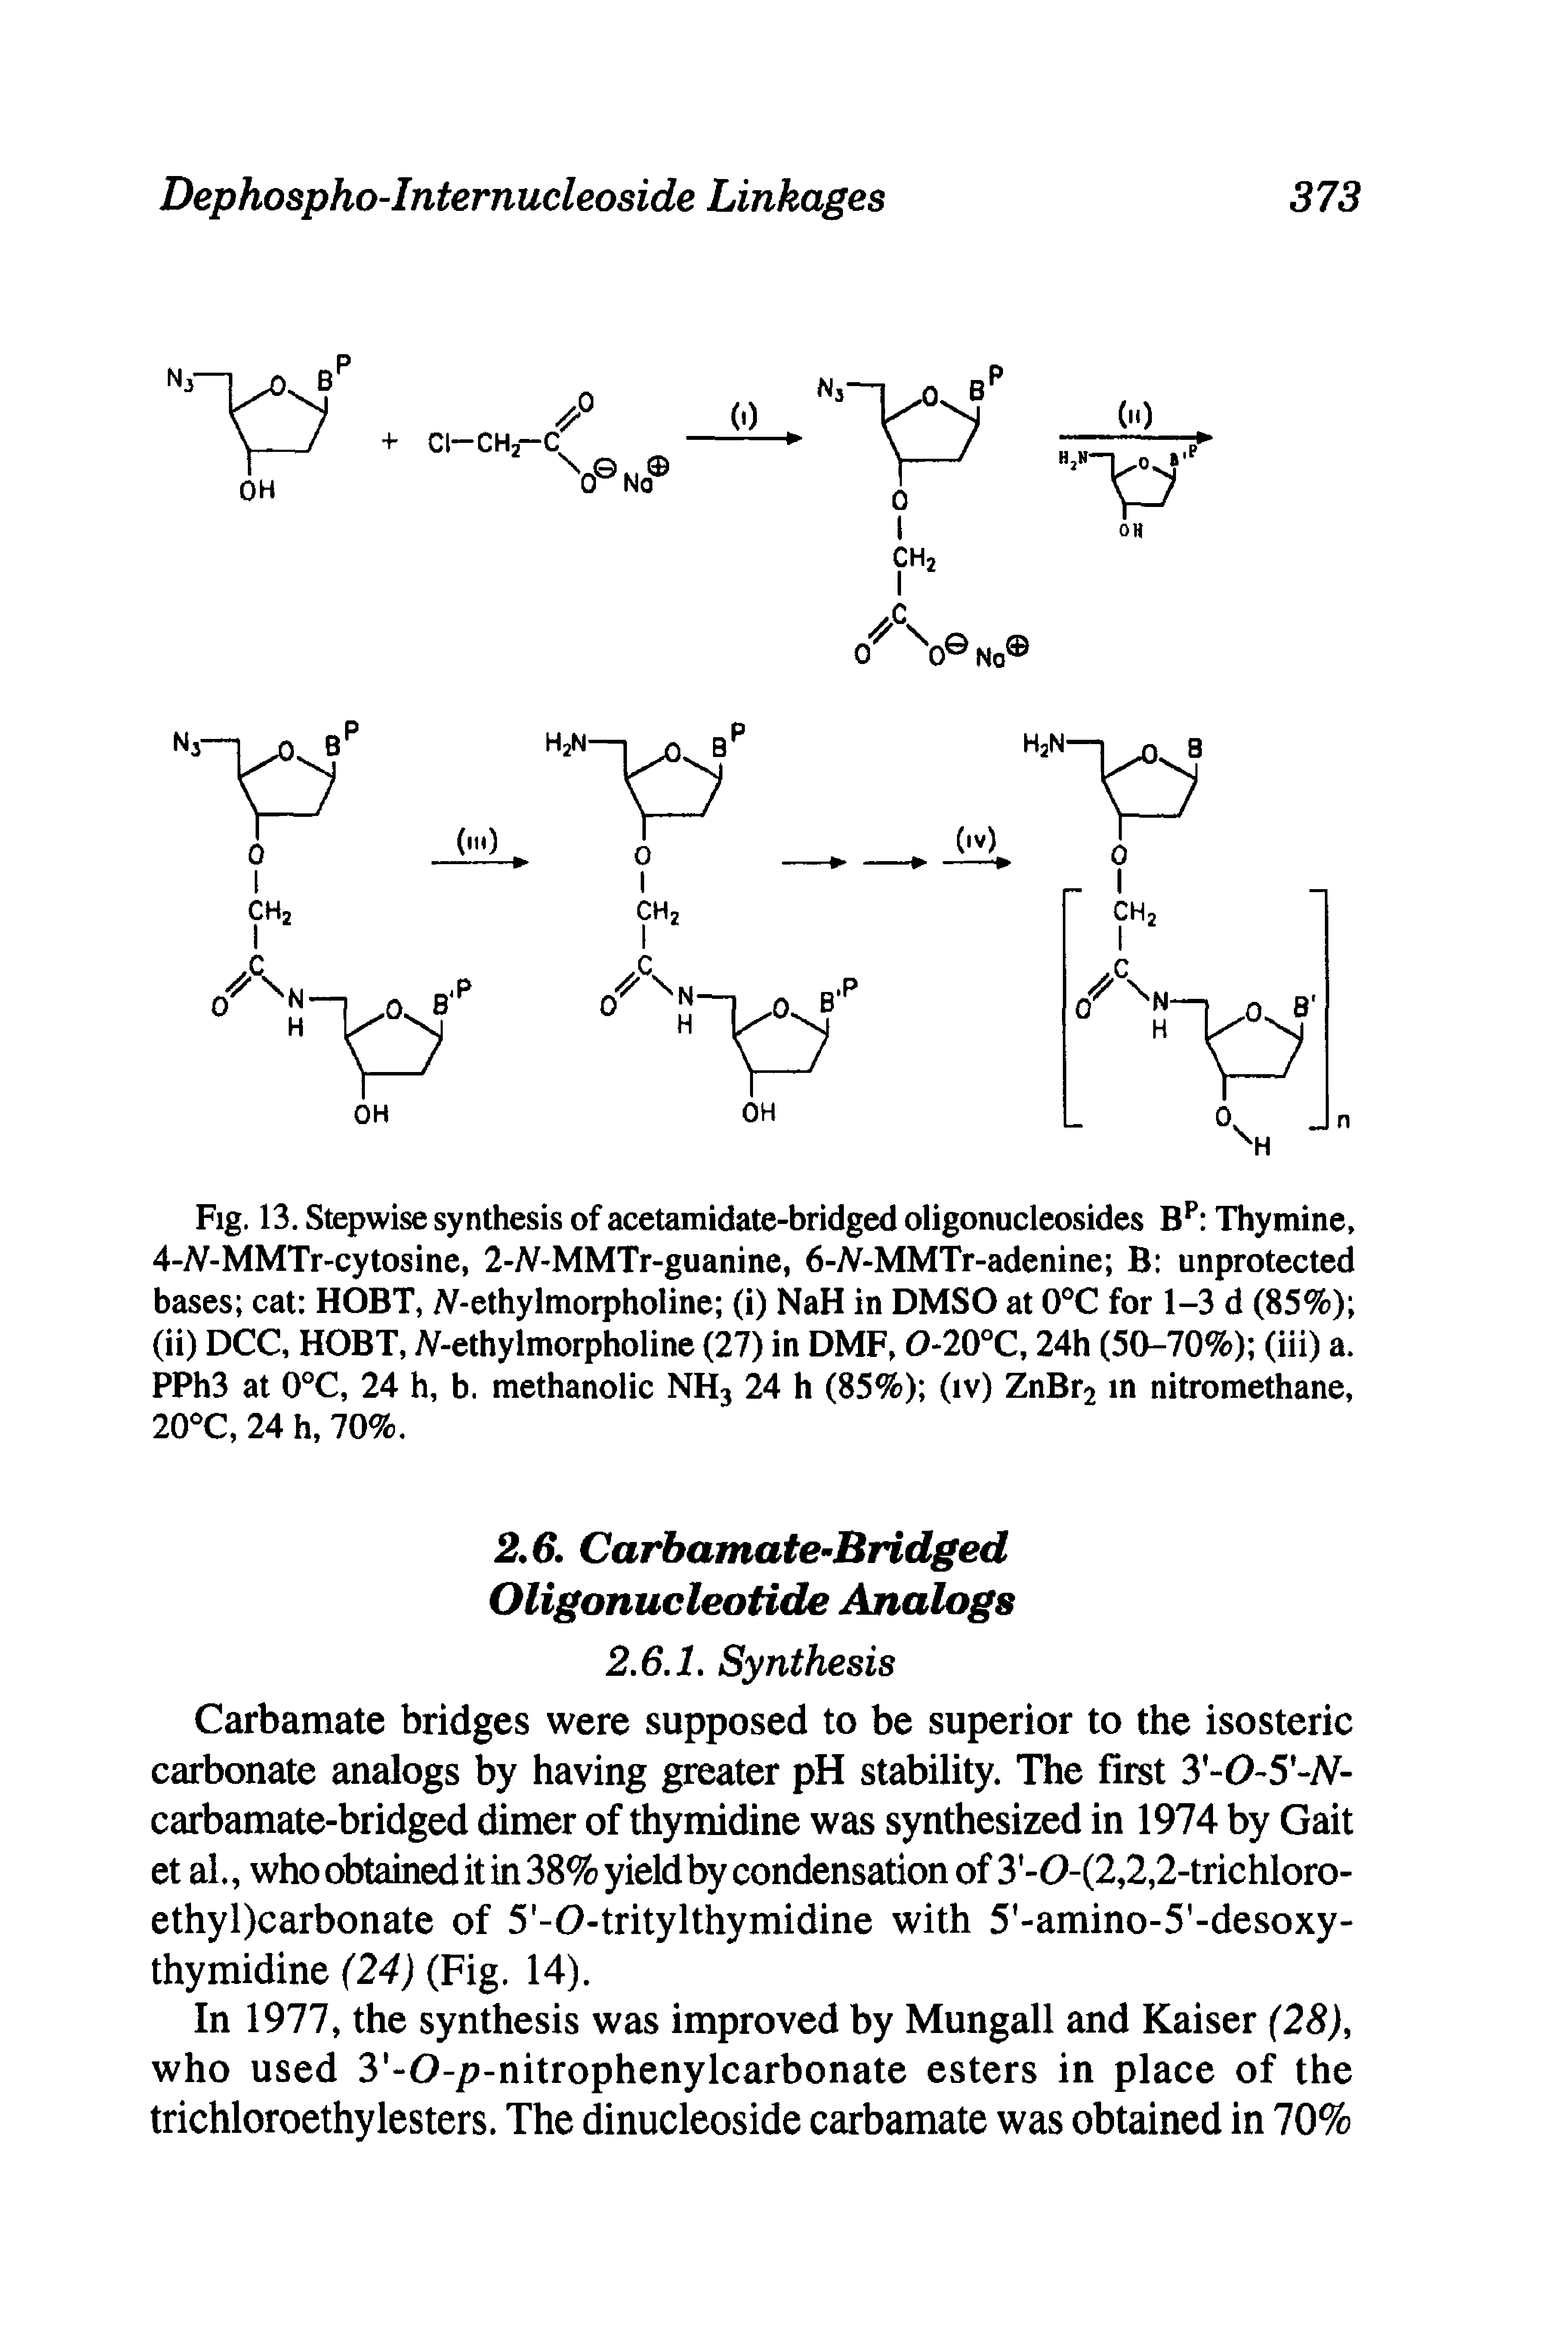 Fig. 13. Stepwise synthesis of acetamidate-bridged oligonucleosides B Thymine, 4-lV-MMTr-cytosine, 2-lV-MMTr-guanine, 6-TV-MMTr-adenine B unprotected bases cat HOBT, A -ethylmorpholine (i) NaH in DMSO at 0°C for 1-3 d (85%) (ii) DCC, HOBT, IV-ethylmorpholine (27) in DMF, O-20°C, 24h (50-70%) (iii) a. PPh3 at 0°C, 24 h, b. methanolic NHj 24 h (85%) (iv) ZnBr2 in nitromethane, 20°C, 24 h, 70%.